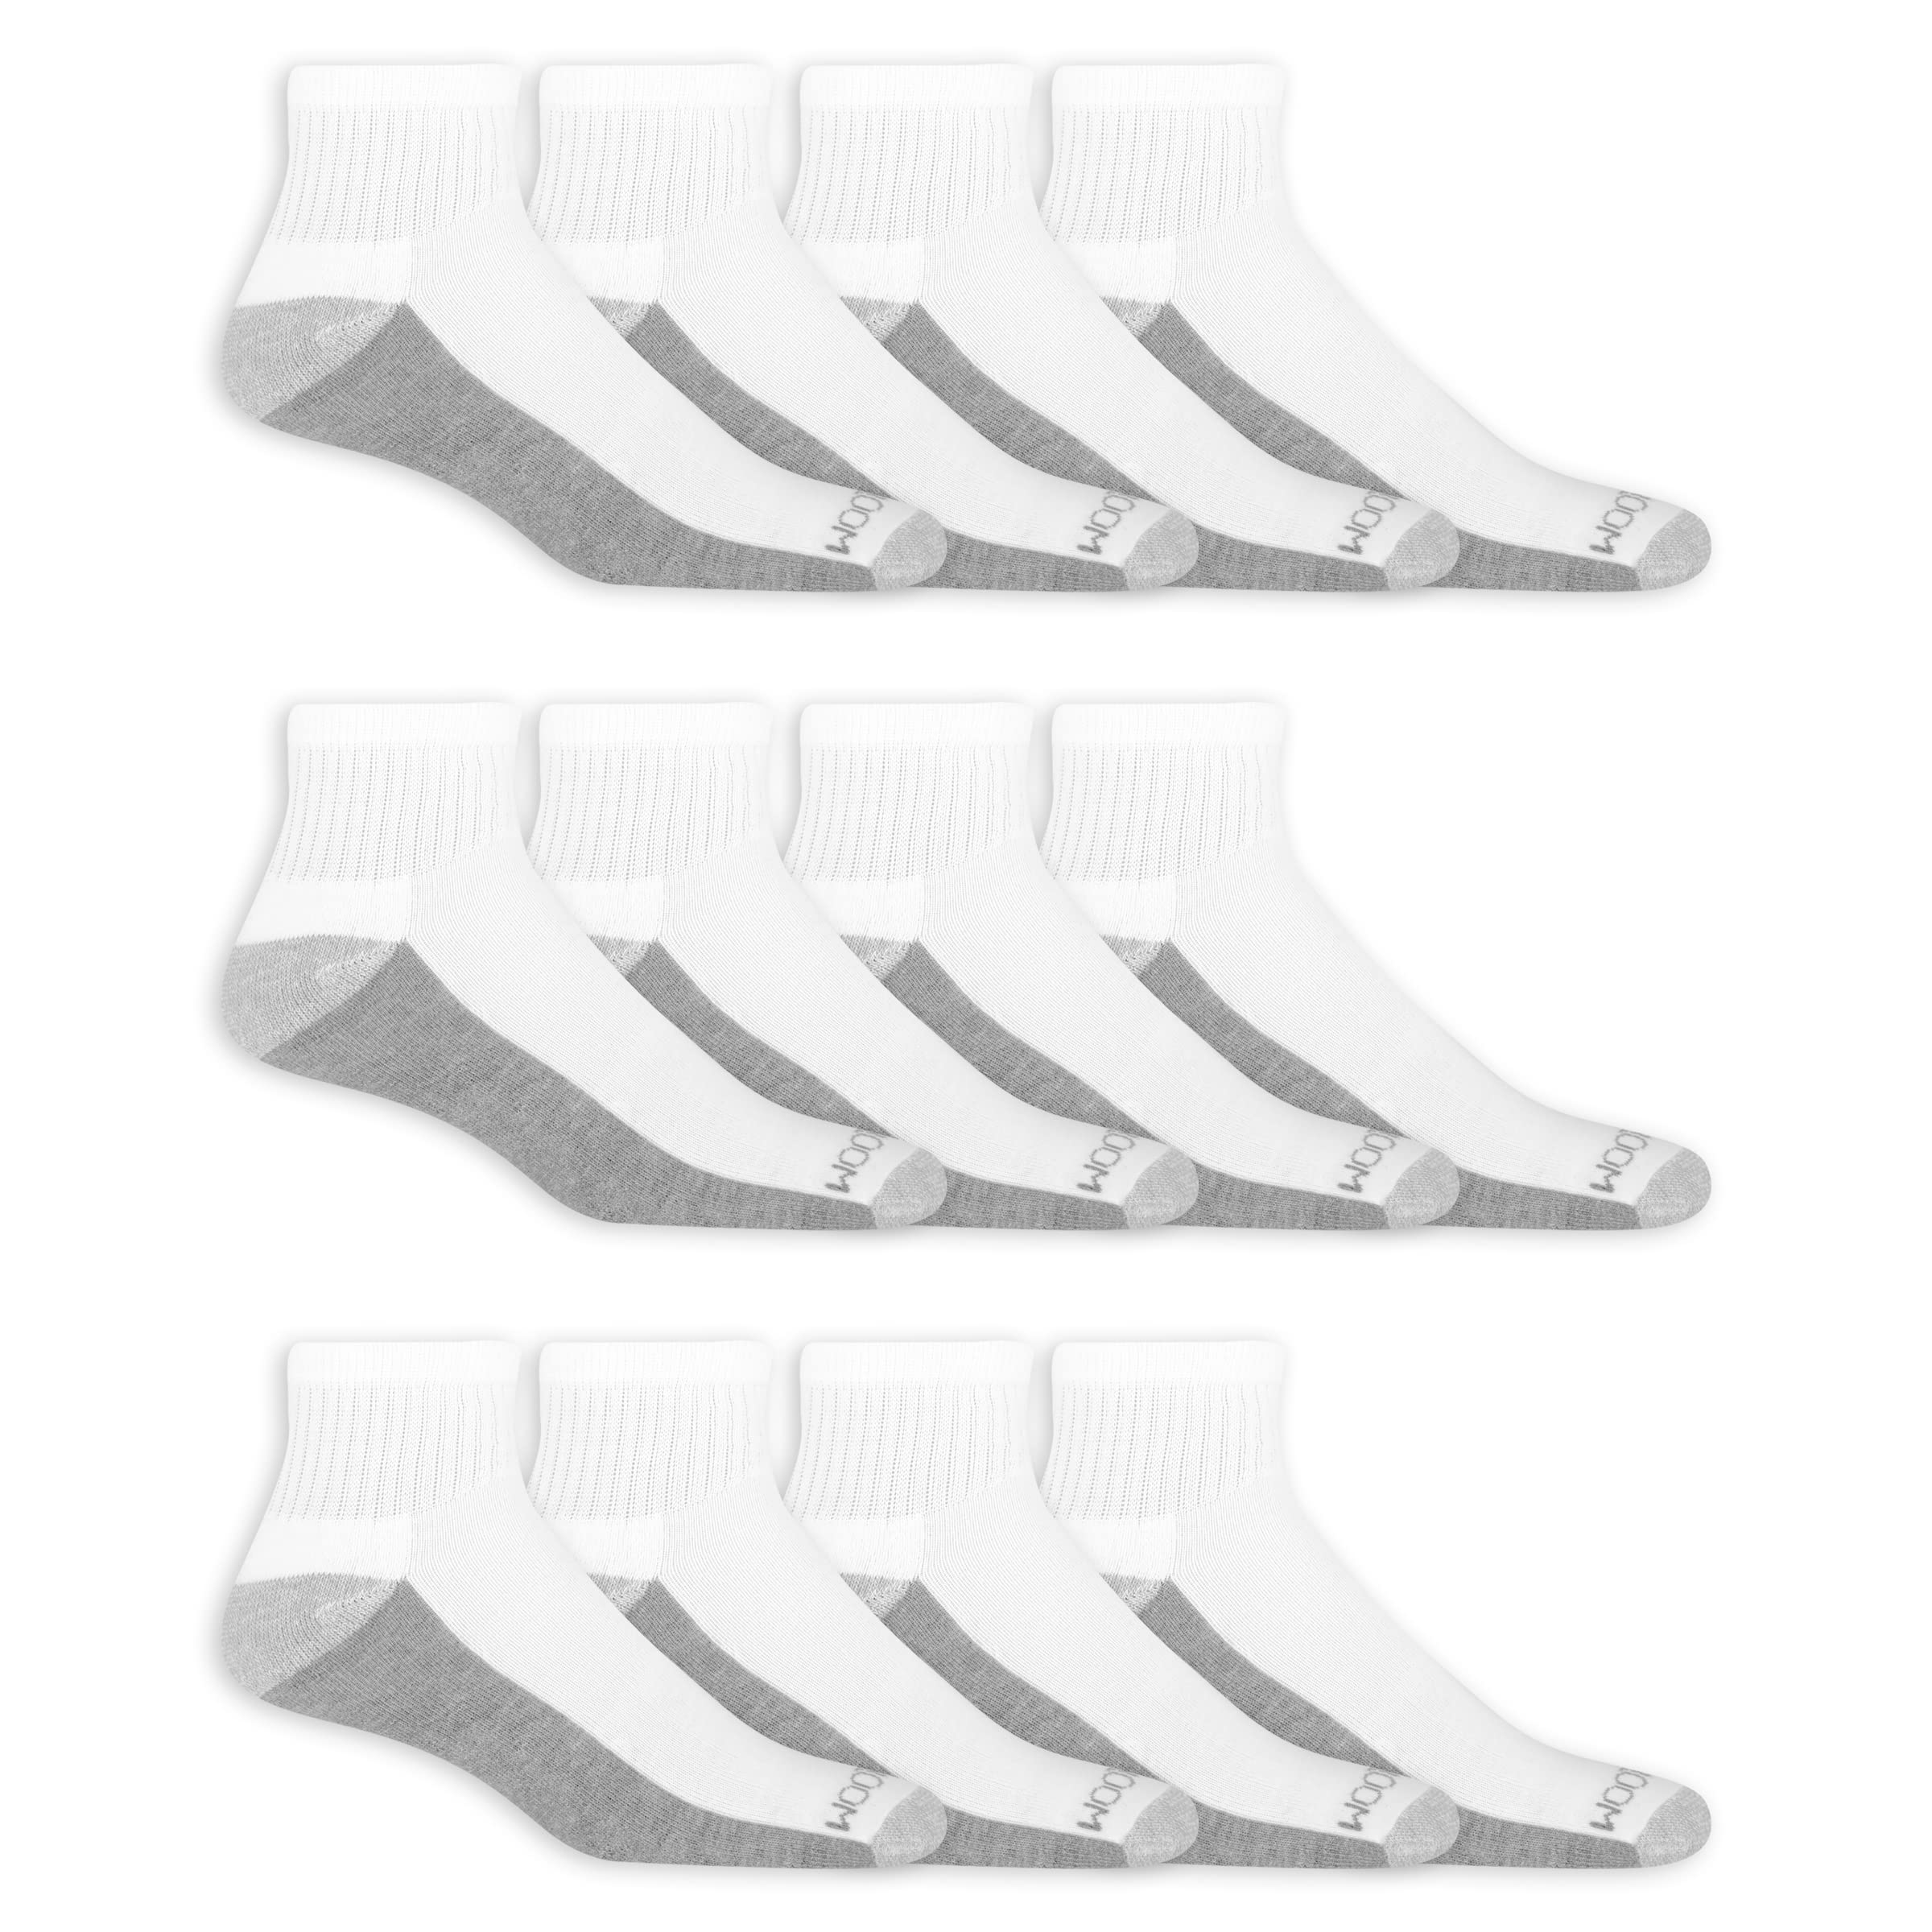 Fruit of the Loom Men's 12 Pair Pack Dual Defense Cushioned Socks